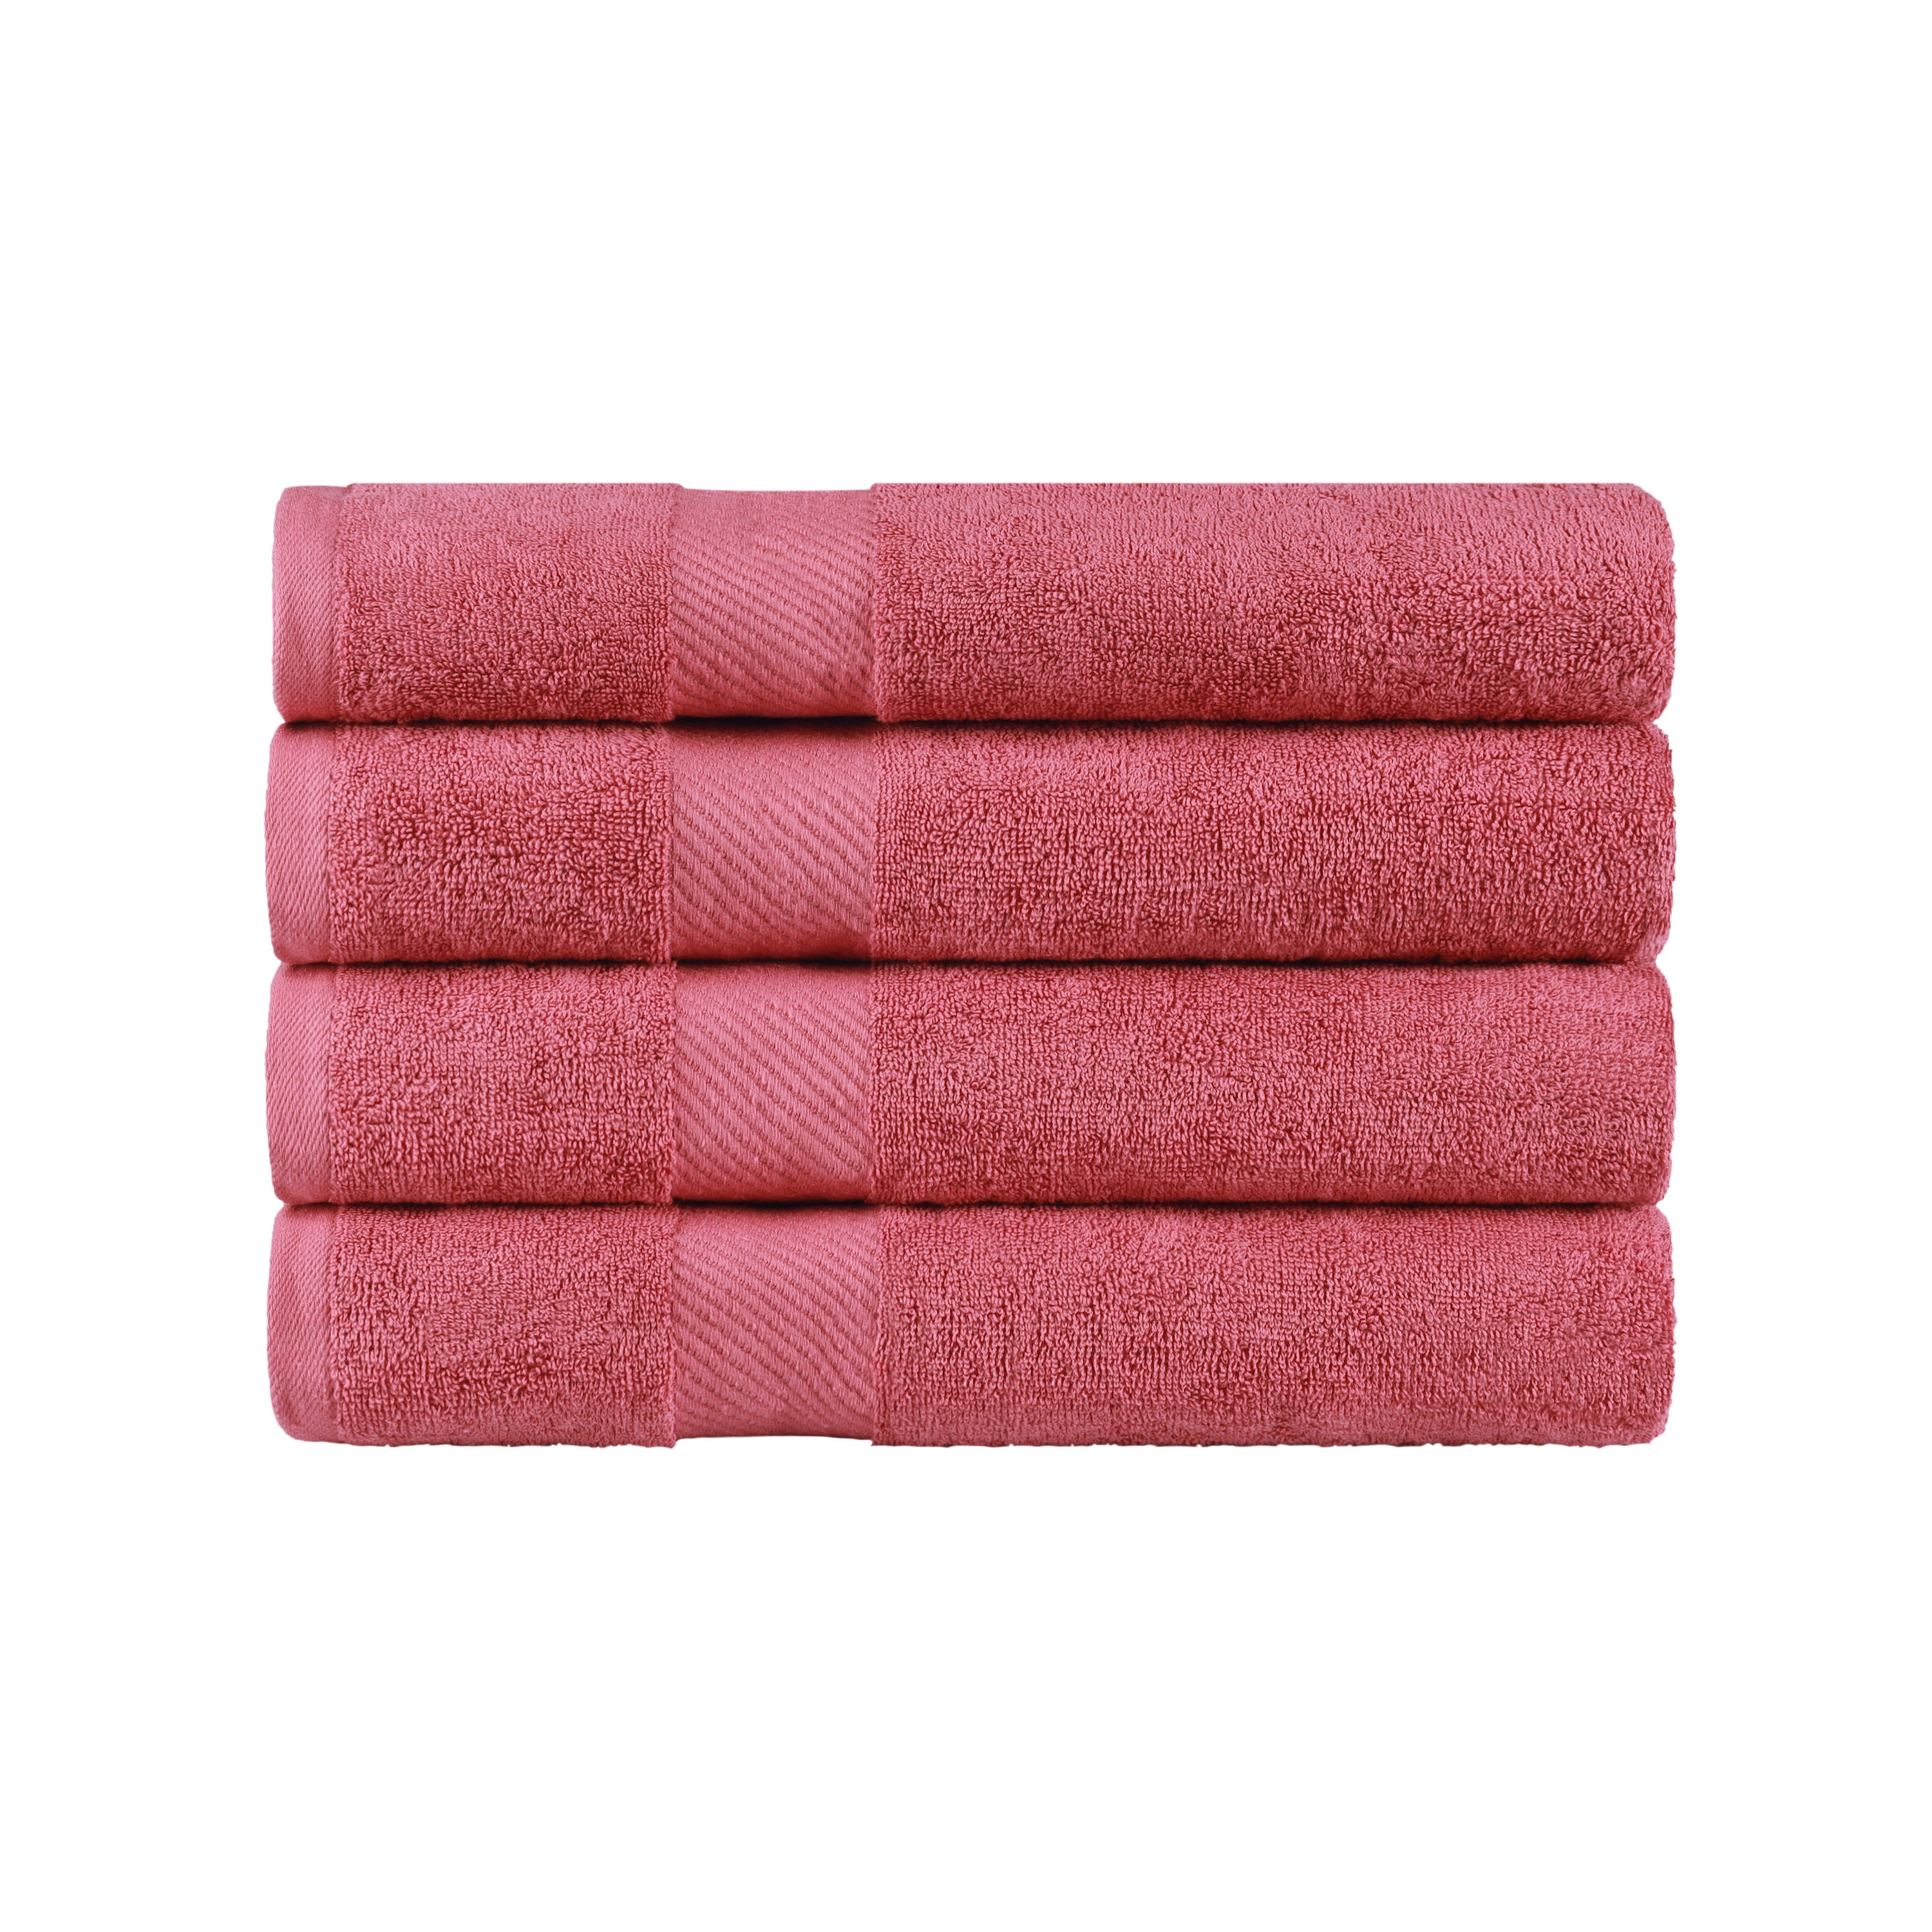 Premium Cotton 800 GSM Heavyweight Plush Luxury 9 Piece Bathroom Towel Set,  Tea Rose Pink - Blue Nile Mills